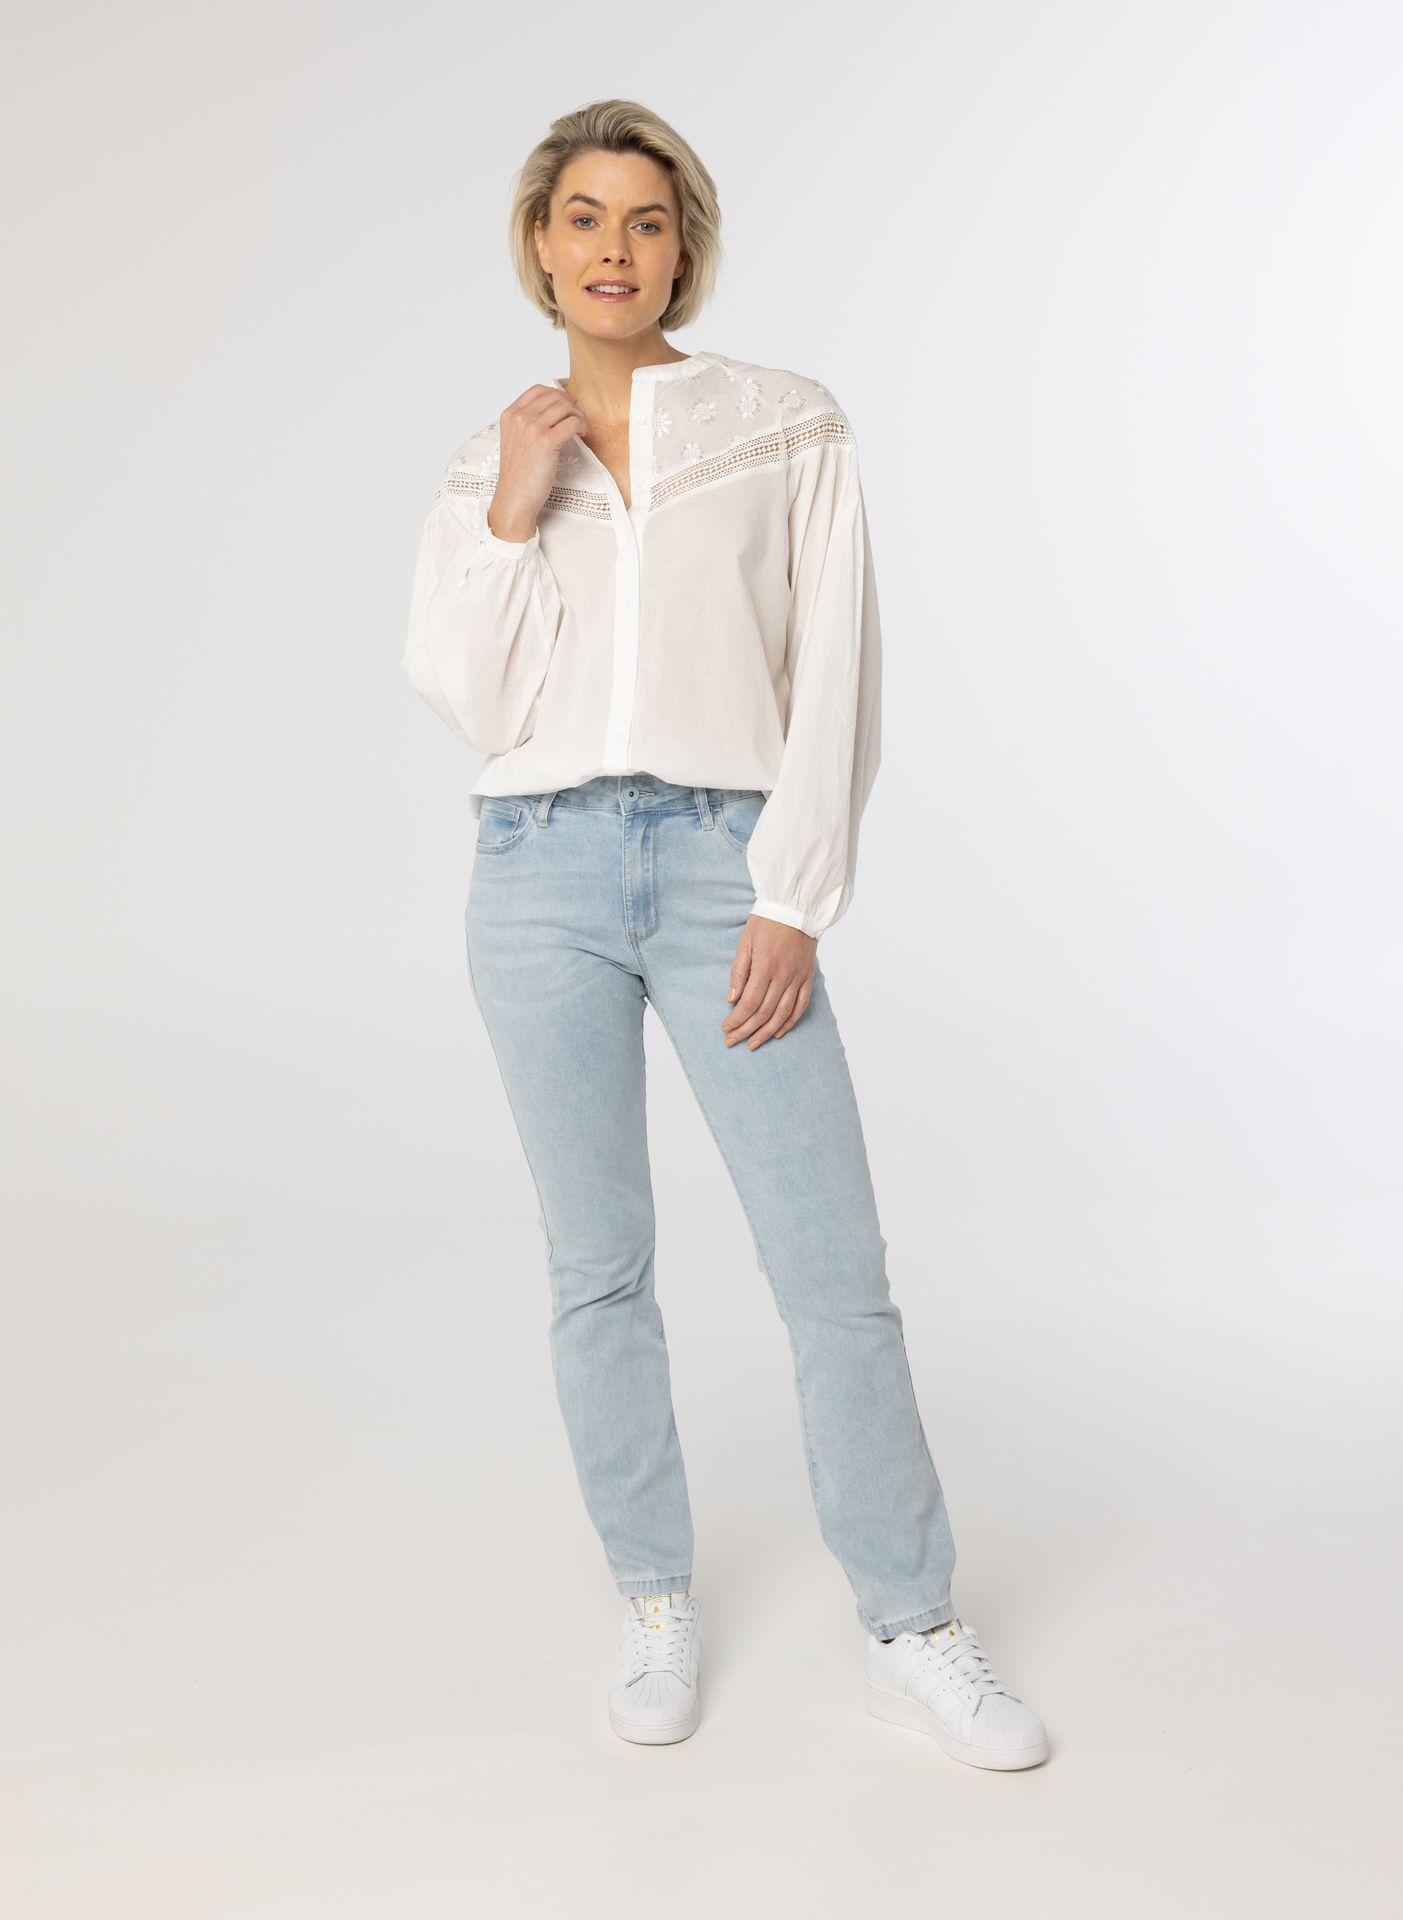 Norah Off white blouse off-white 214235-101